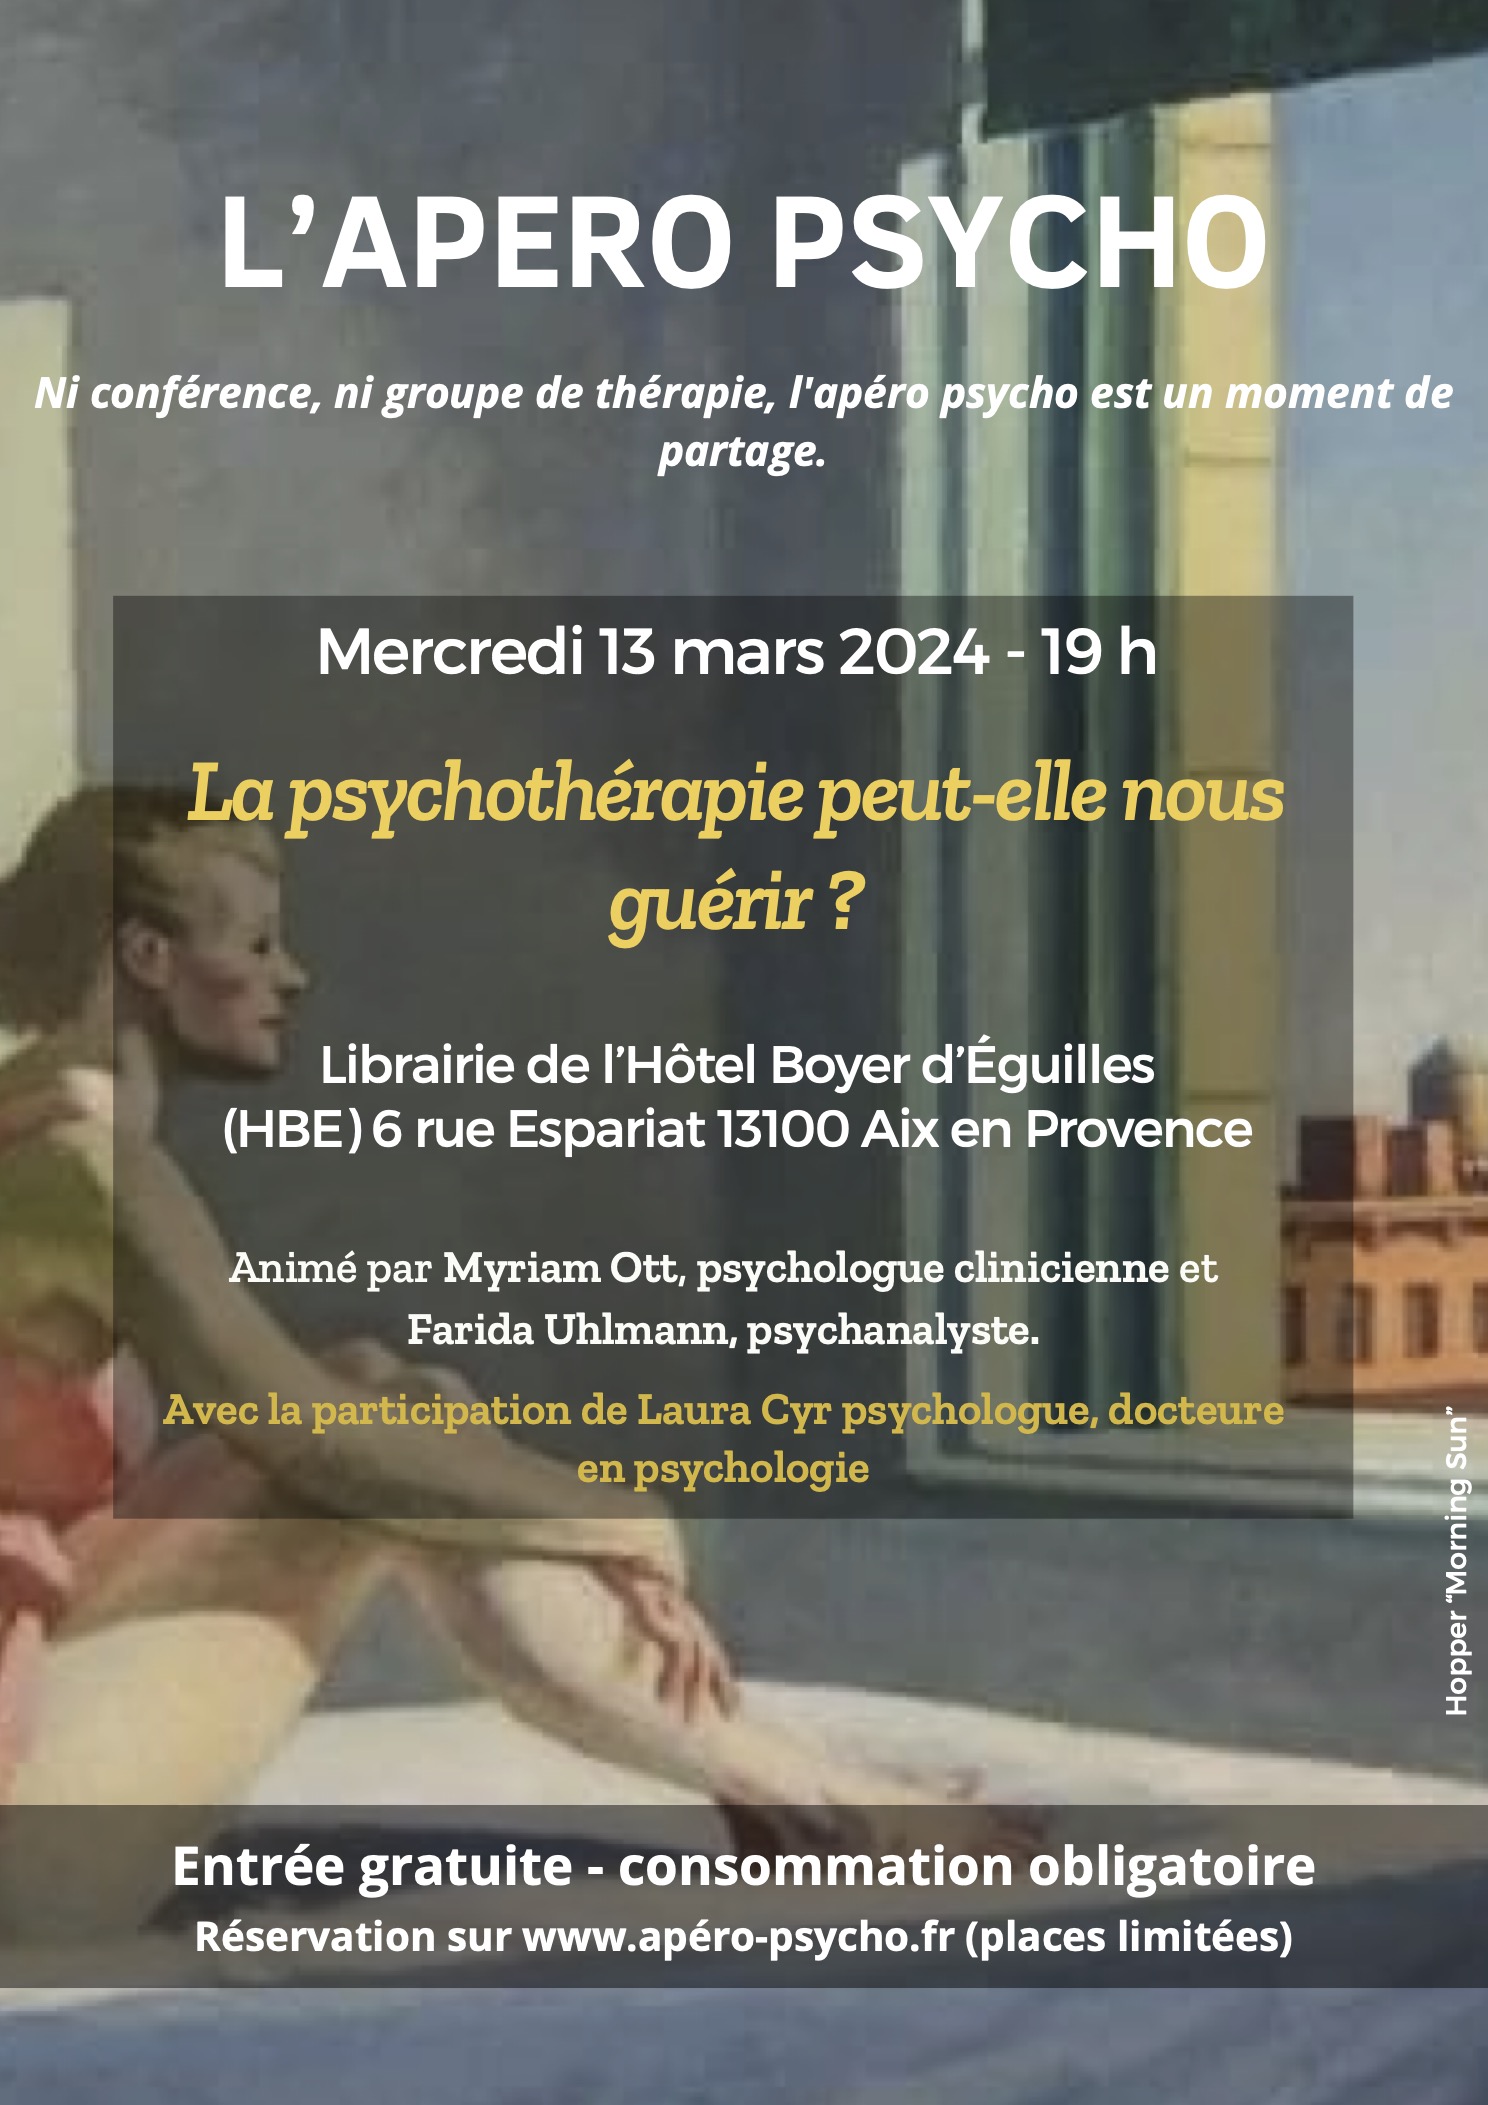 Apéro psycho le 13 Mars 2024 à Aix-en-Provence 